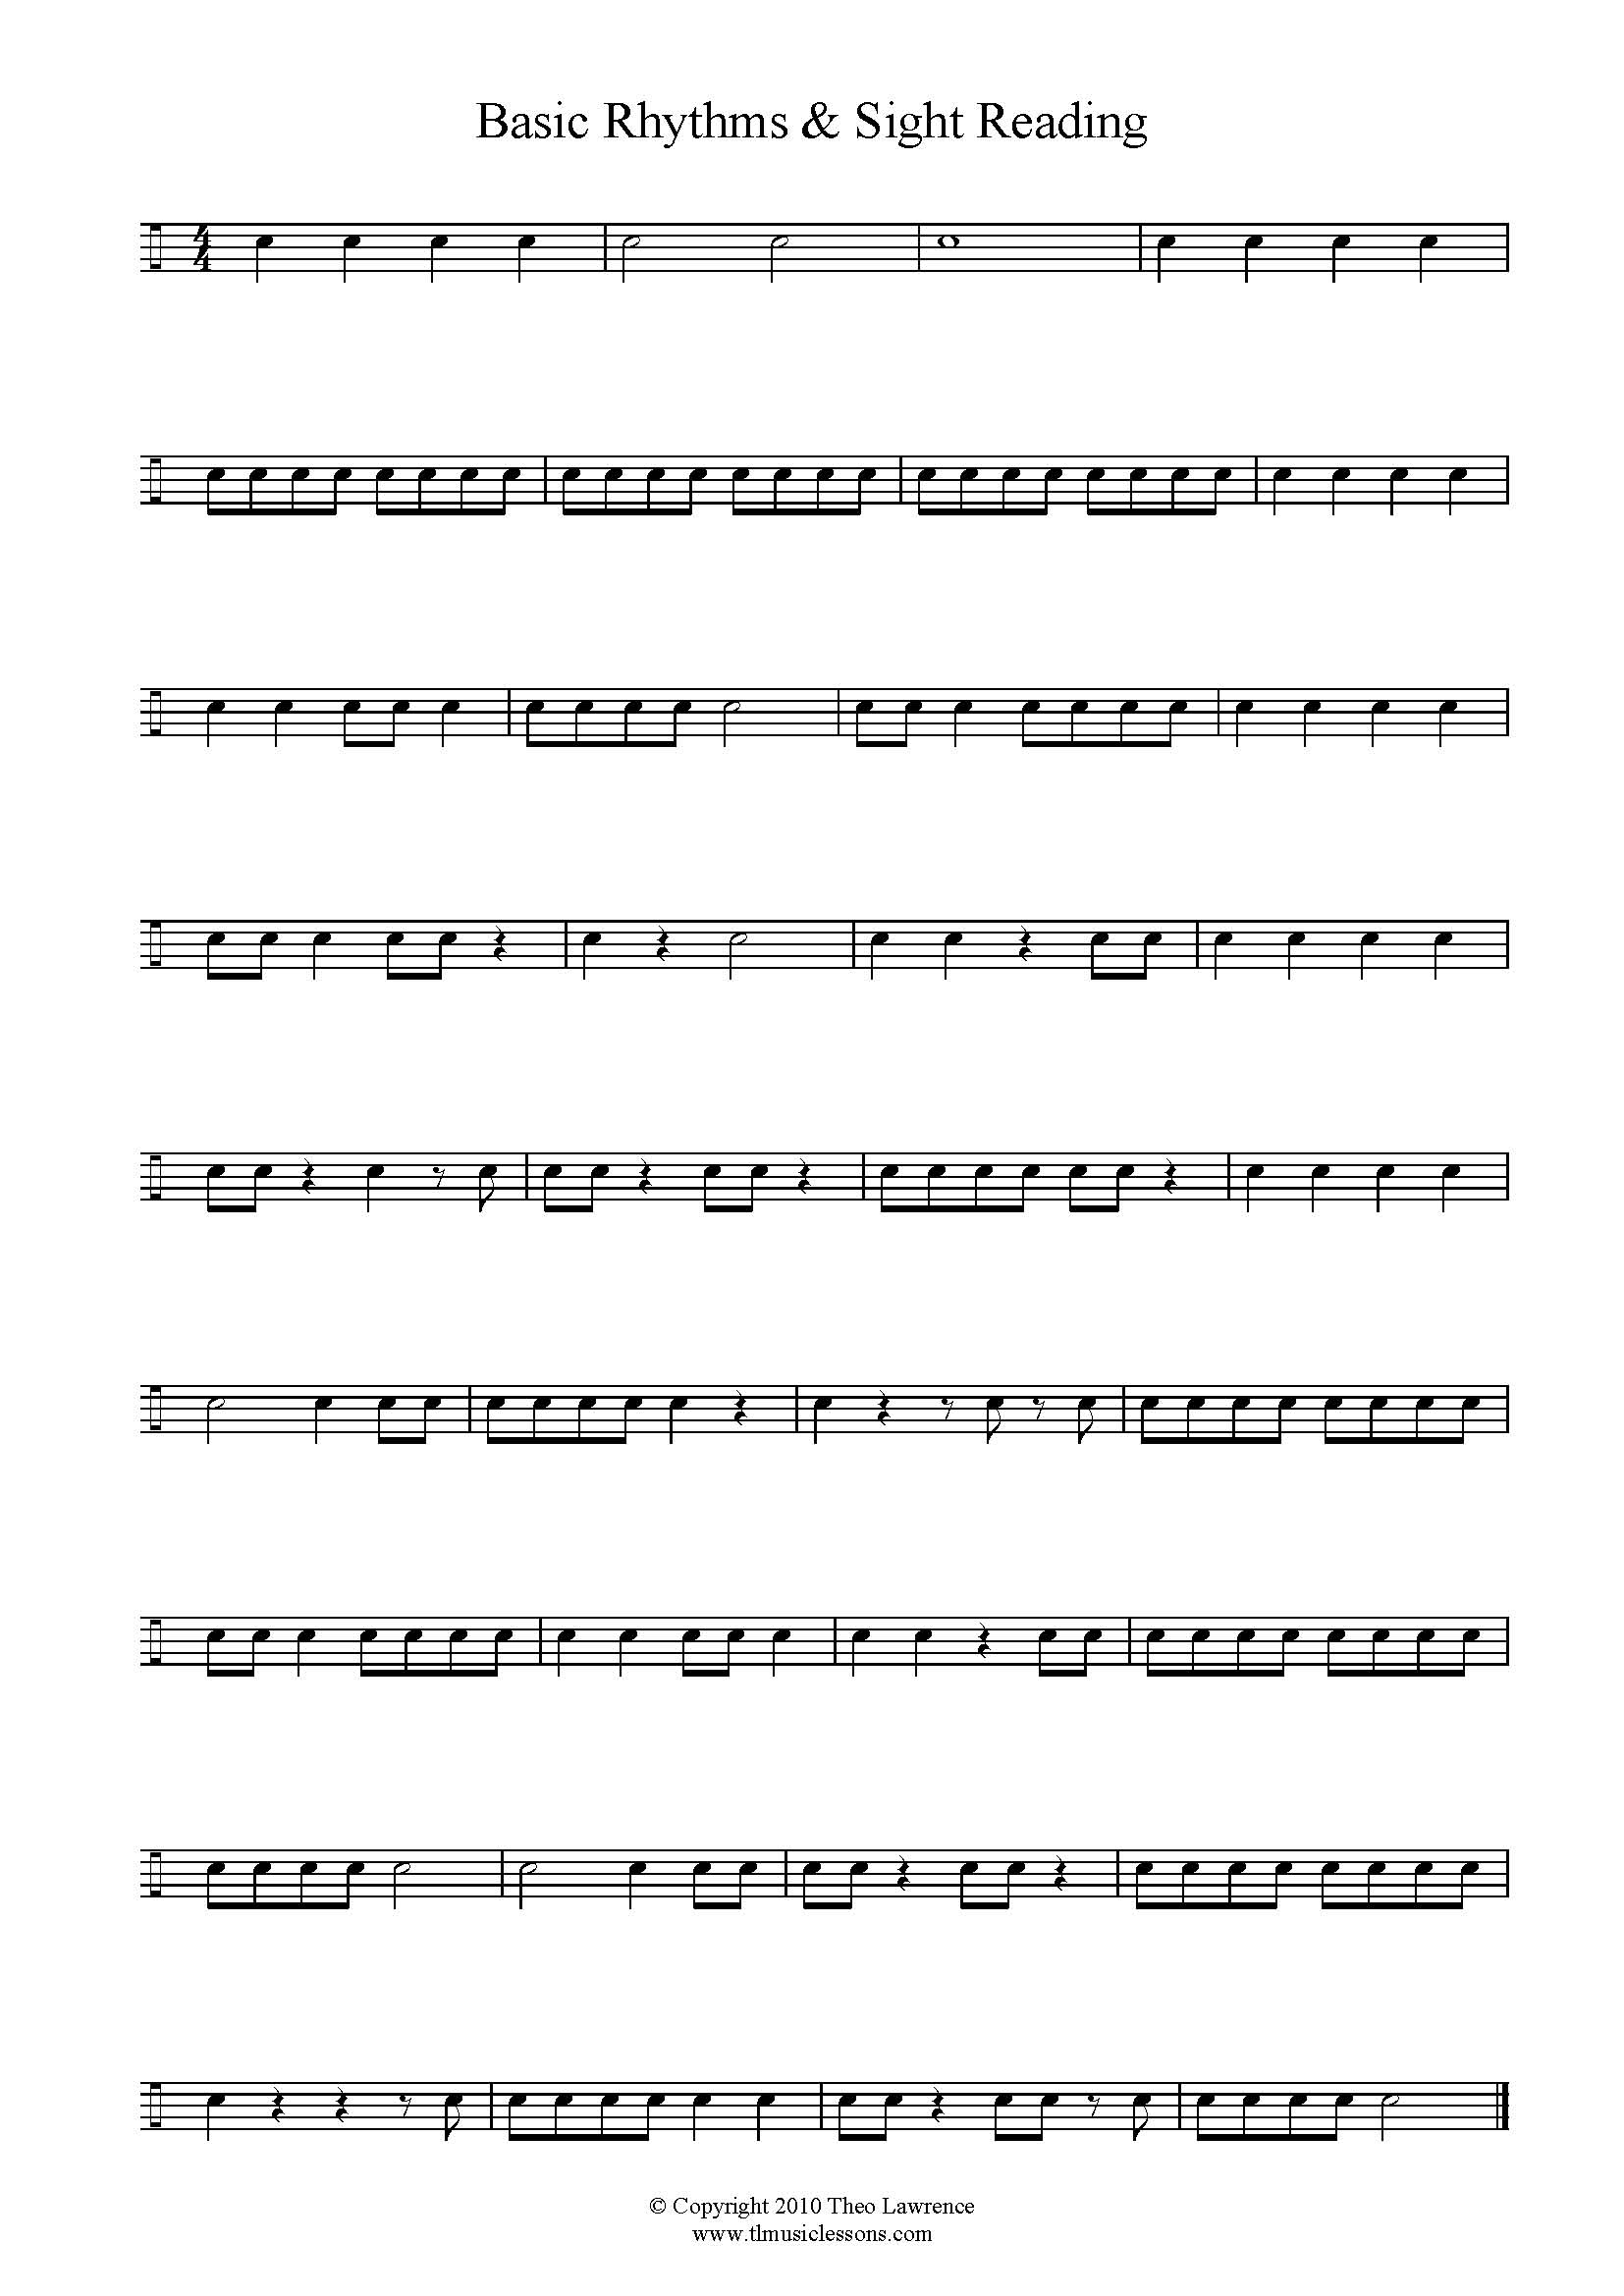 Beginner Snare Drum Sheet Music Image